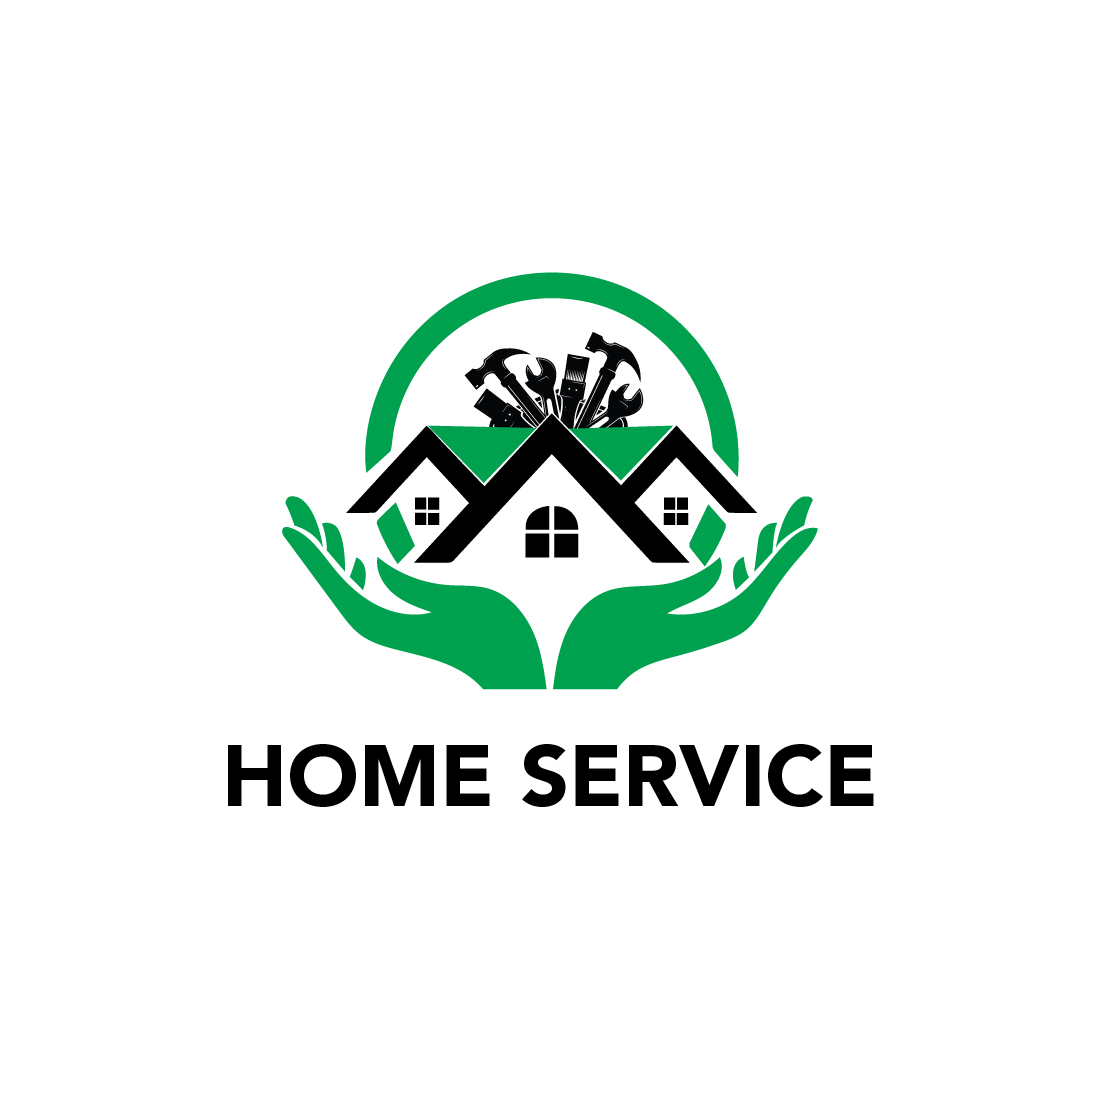 Logo for a home service company.